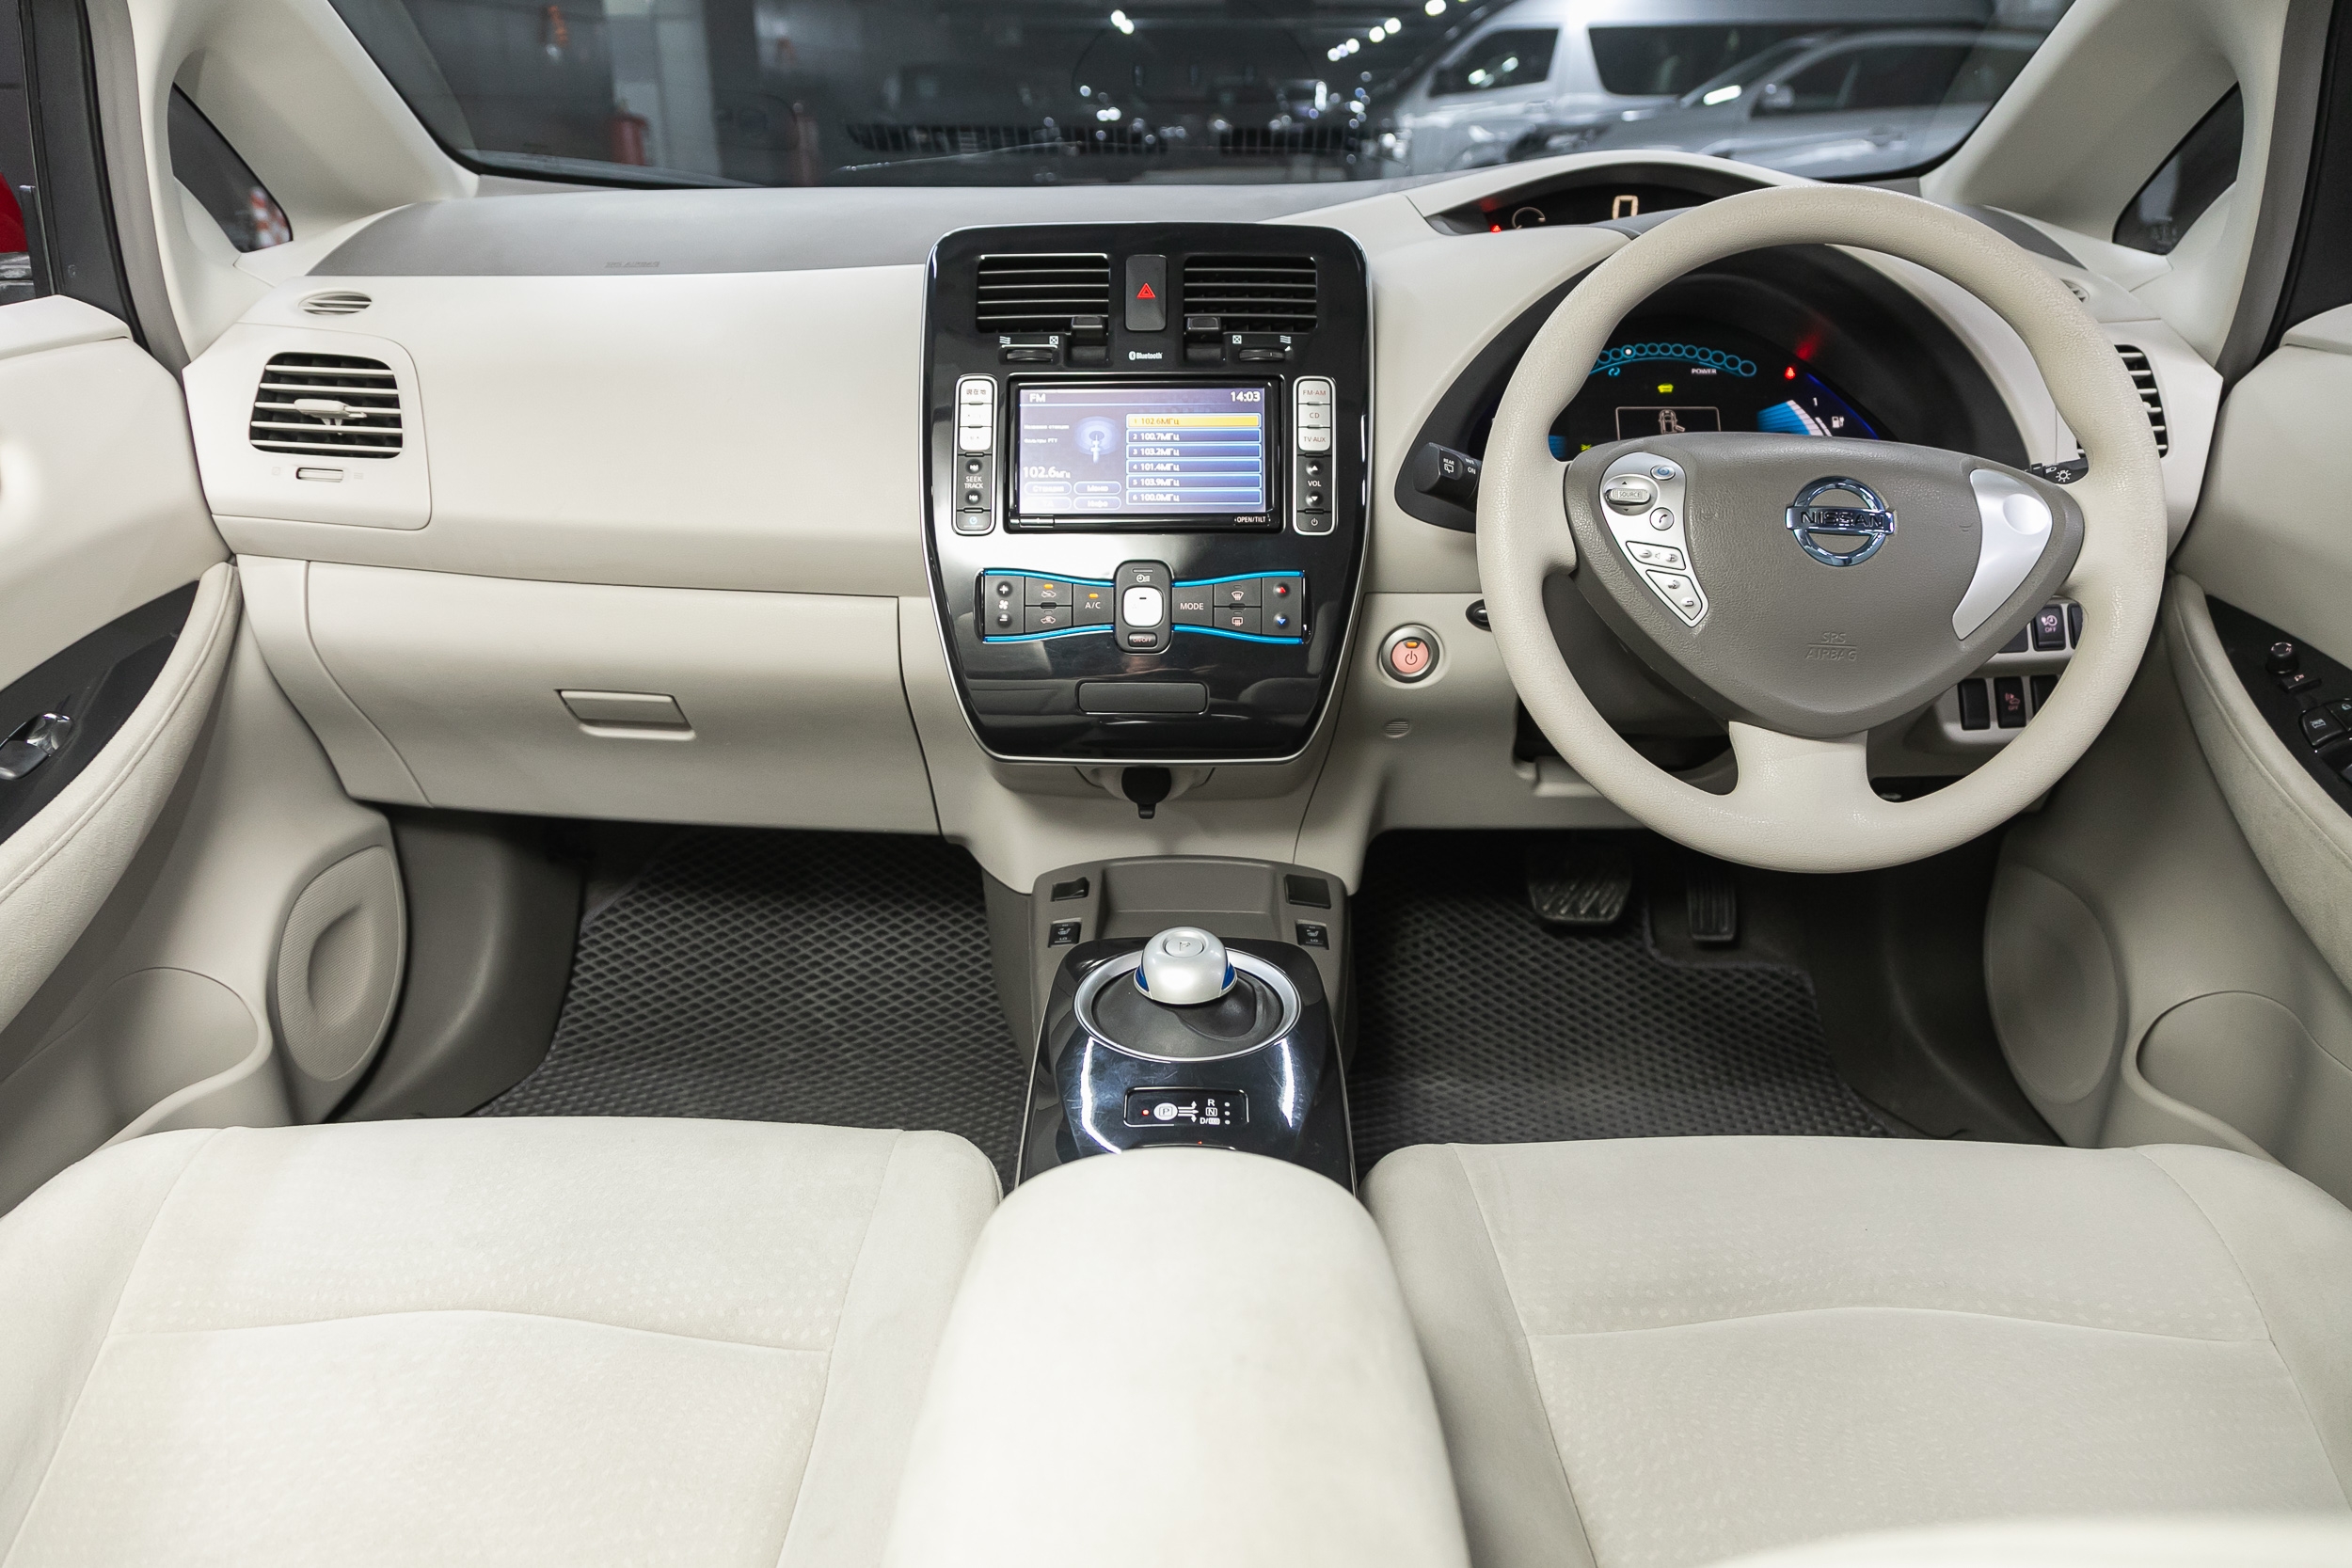 Nissan Leaf front interior + dashboard